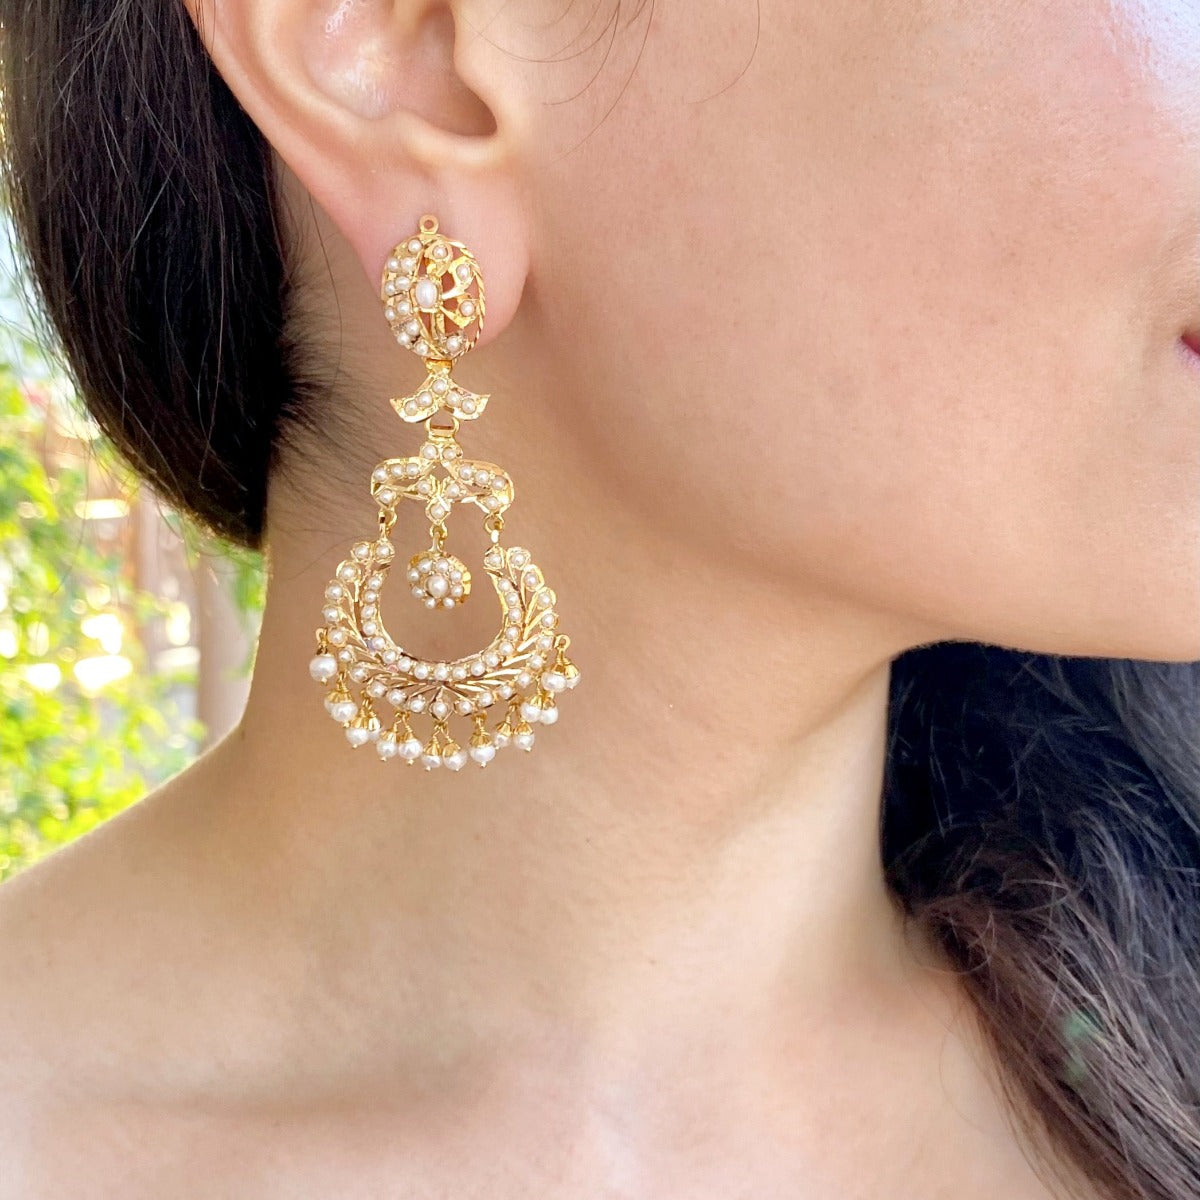 Dangling Pearl Chandbali Earrings in 22ct Gold GER 063